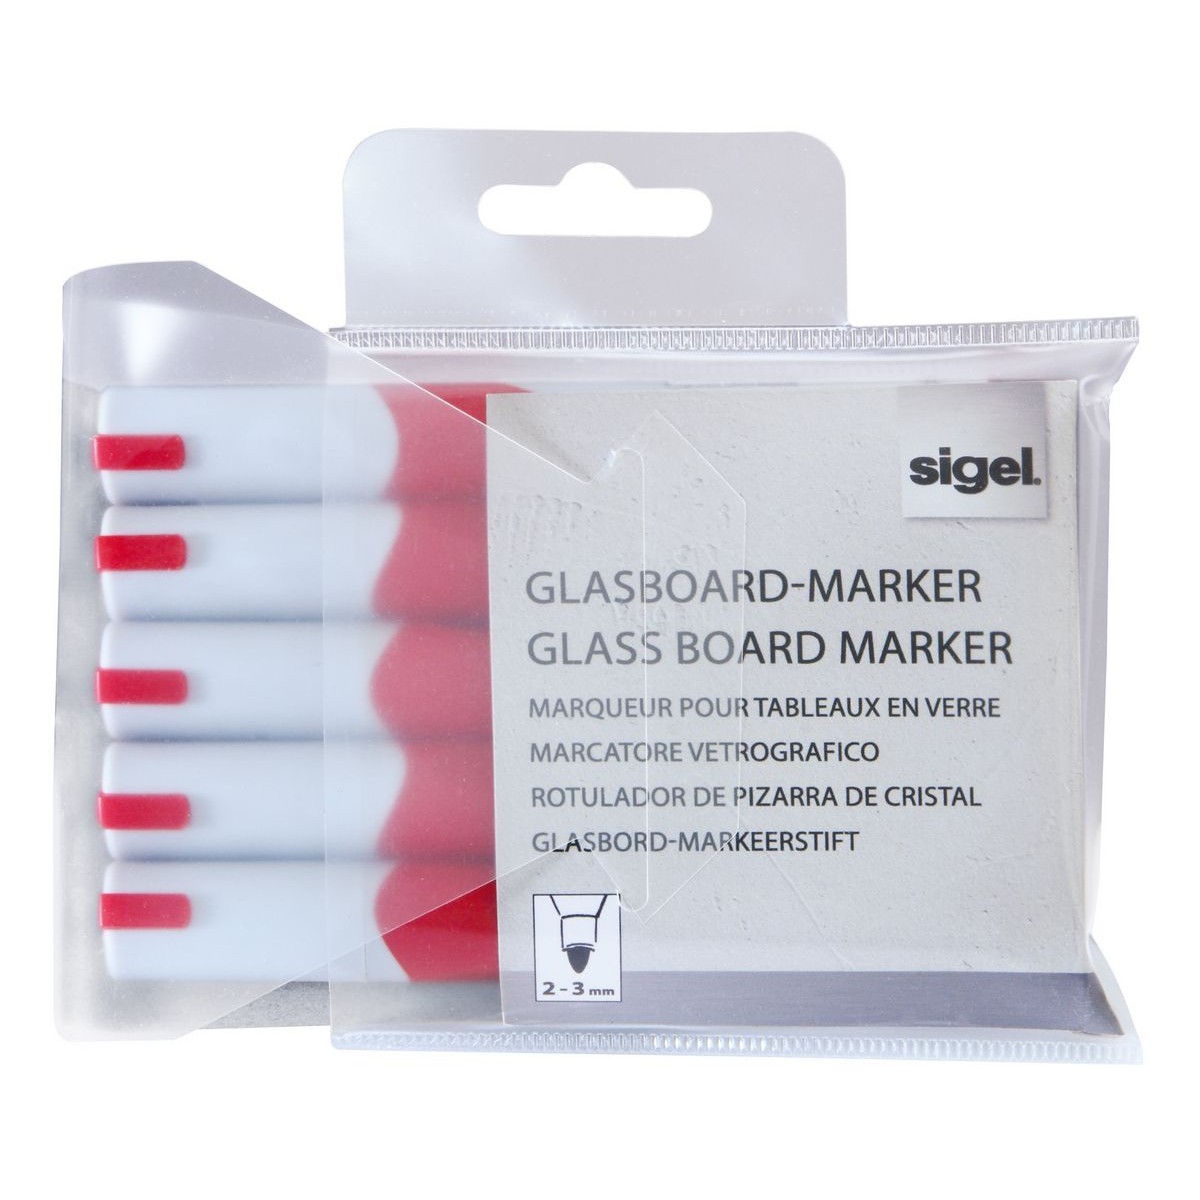 GL713 - Sigel - Marcatore per lavagne di vetro, punta tonda 2-3 mm - Rosso